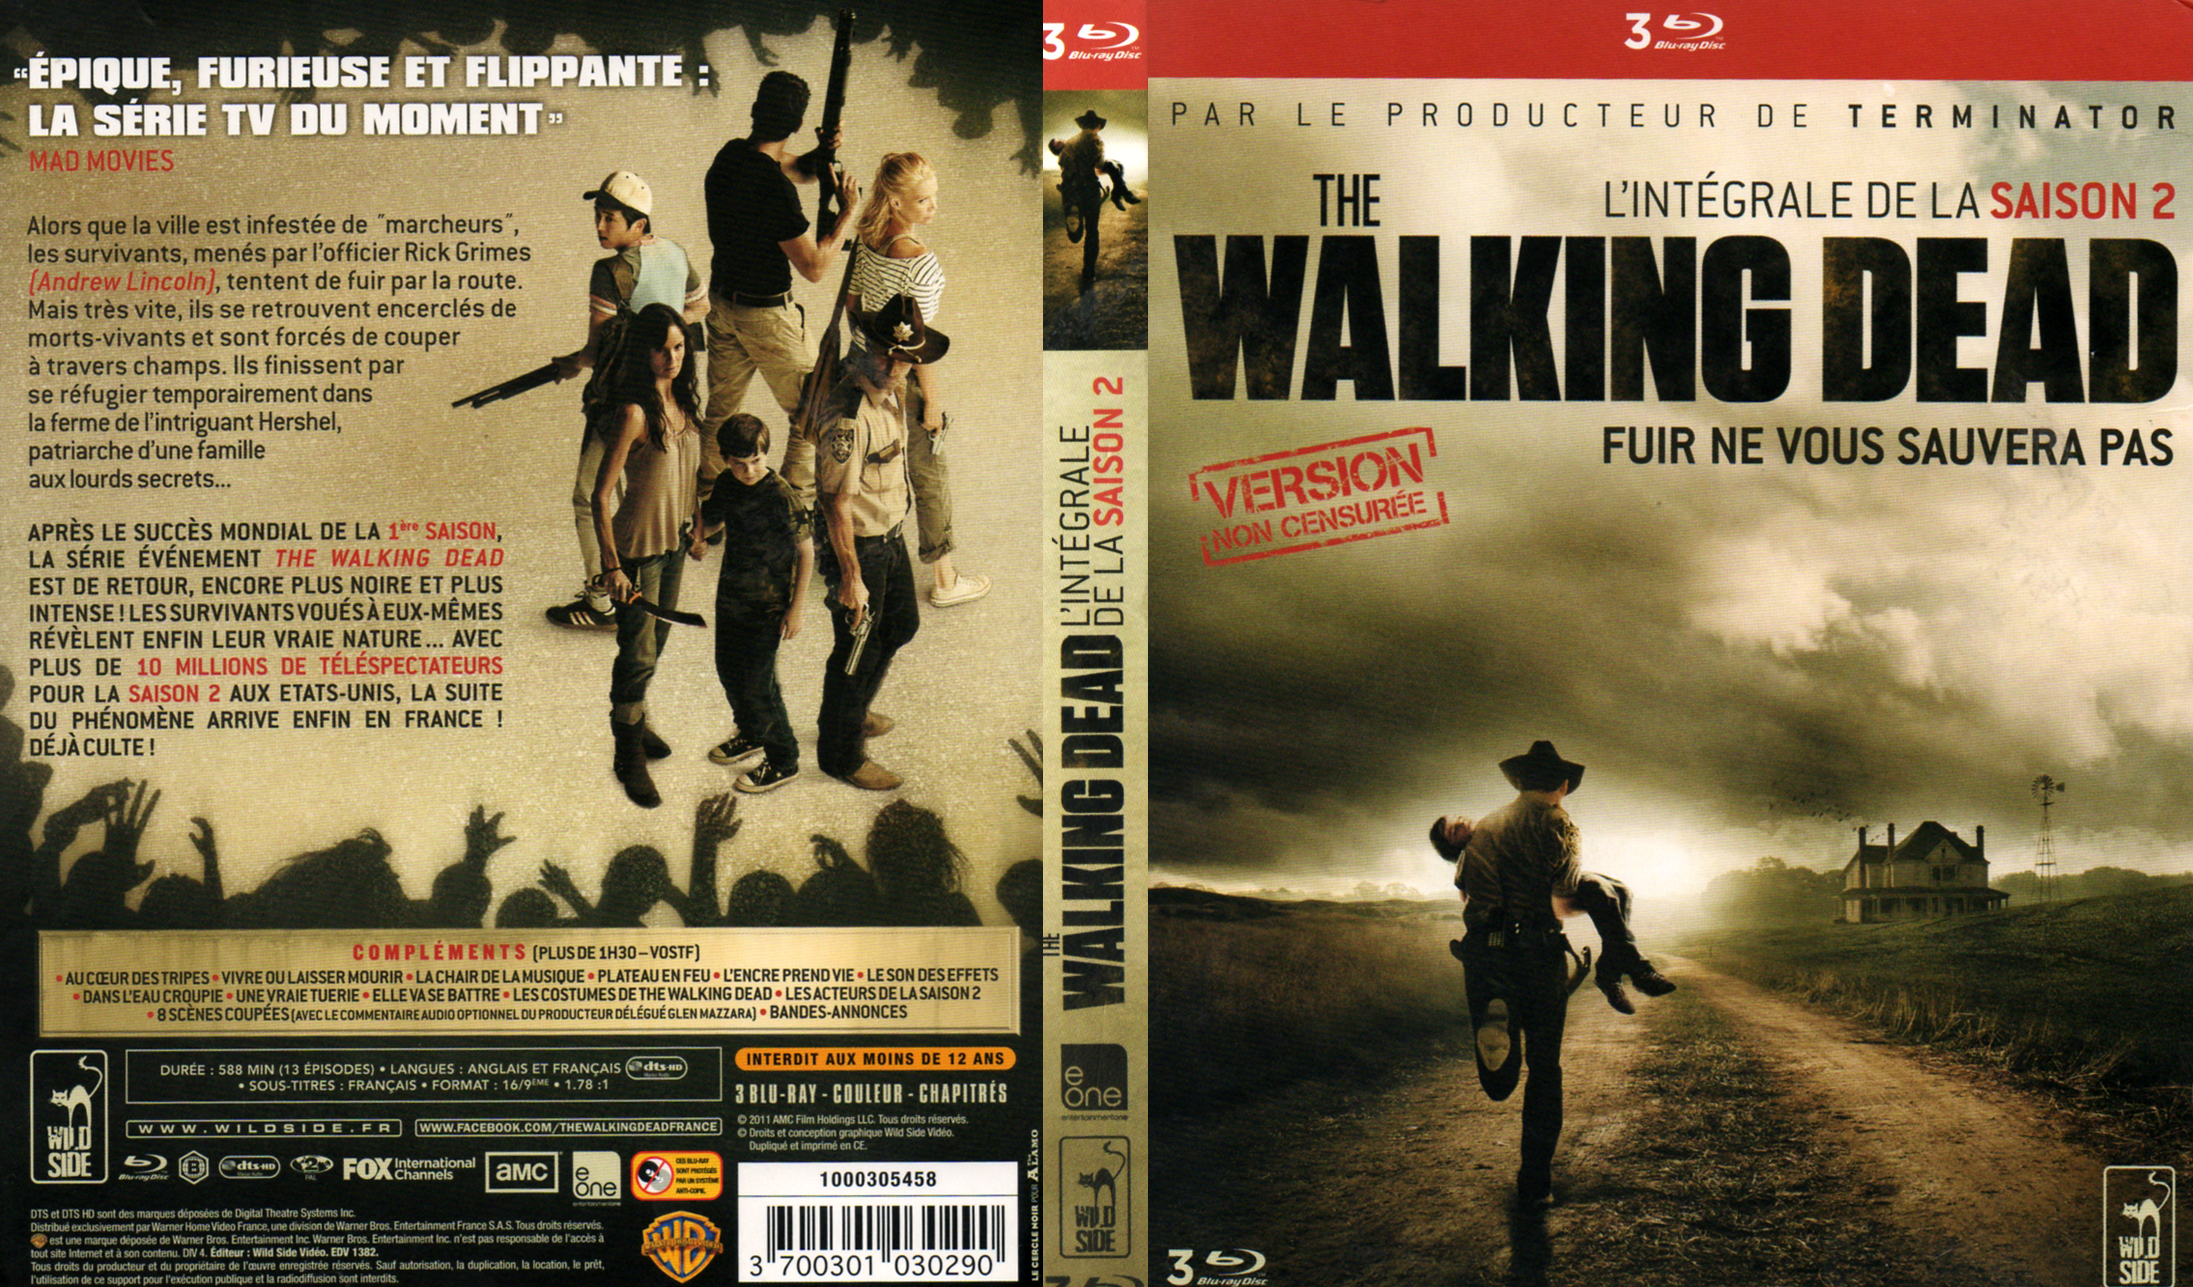 Jaquette DVD The Walking dead Saison 2 (BLU-RAY)